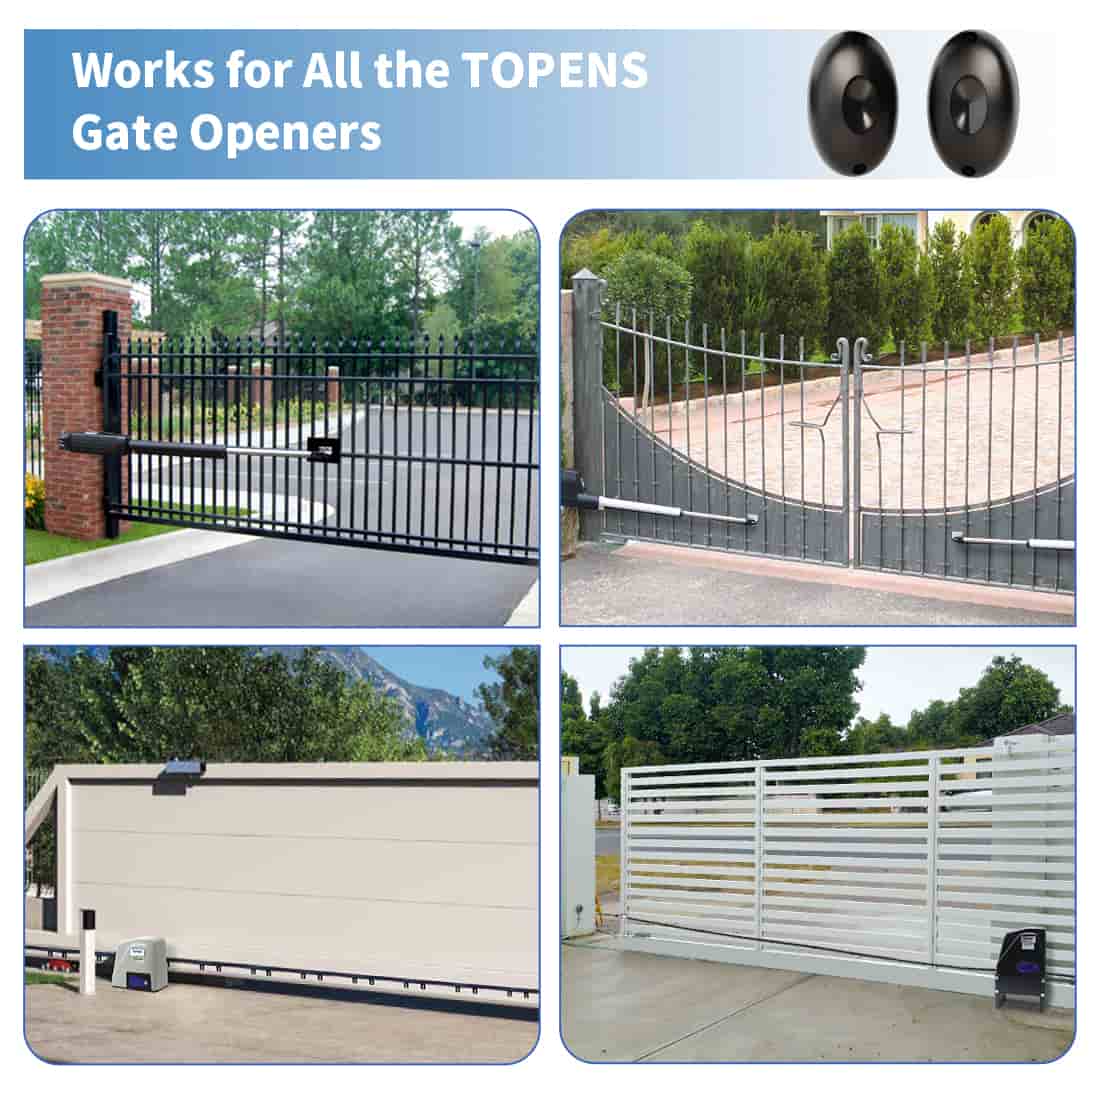 TC102 Photo Eye Sensor Works for All TOPENS Gate Openers